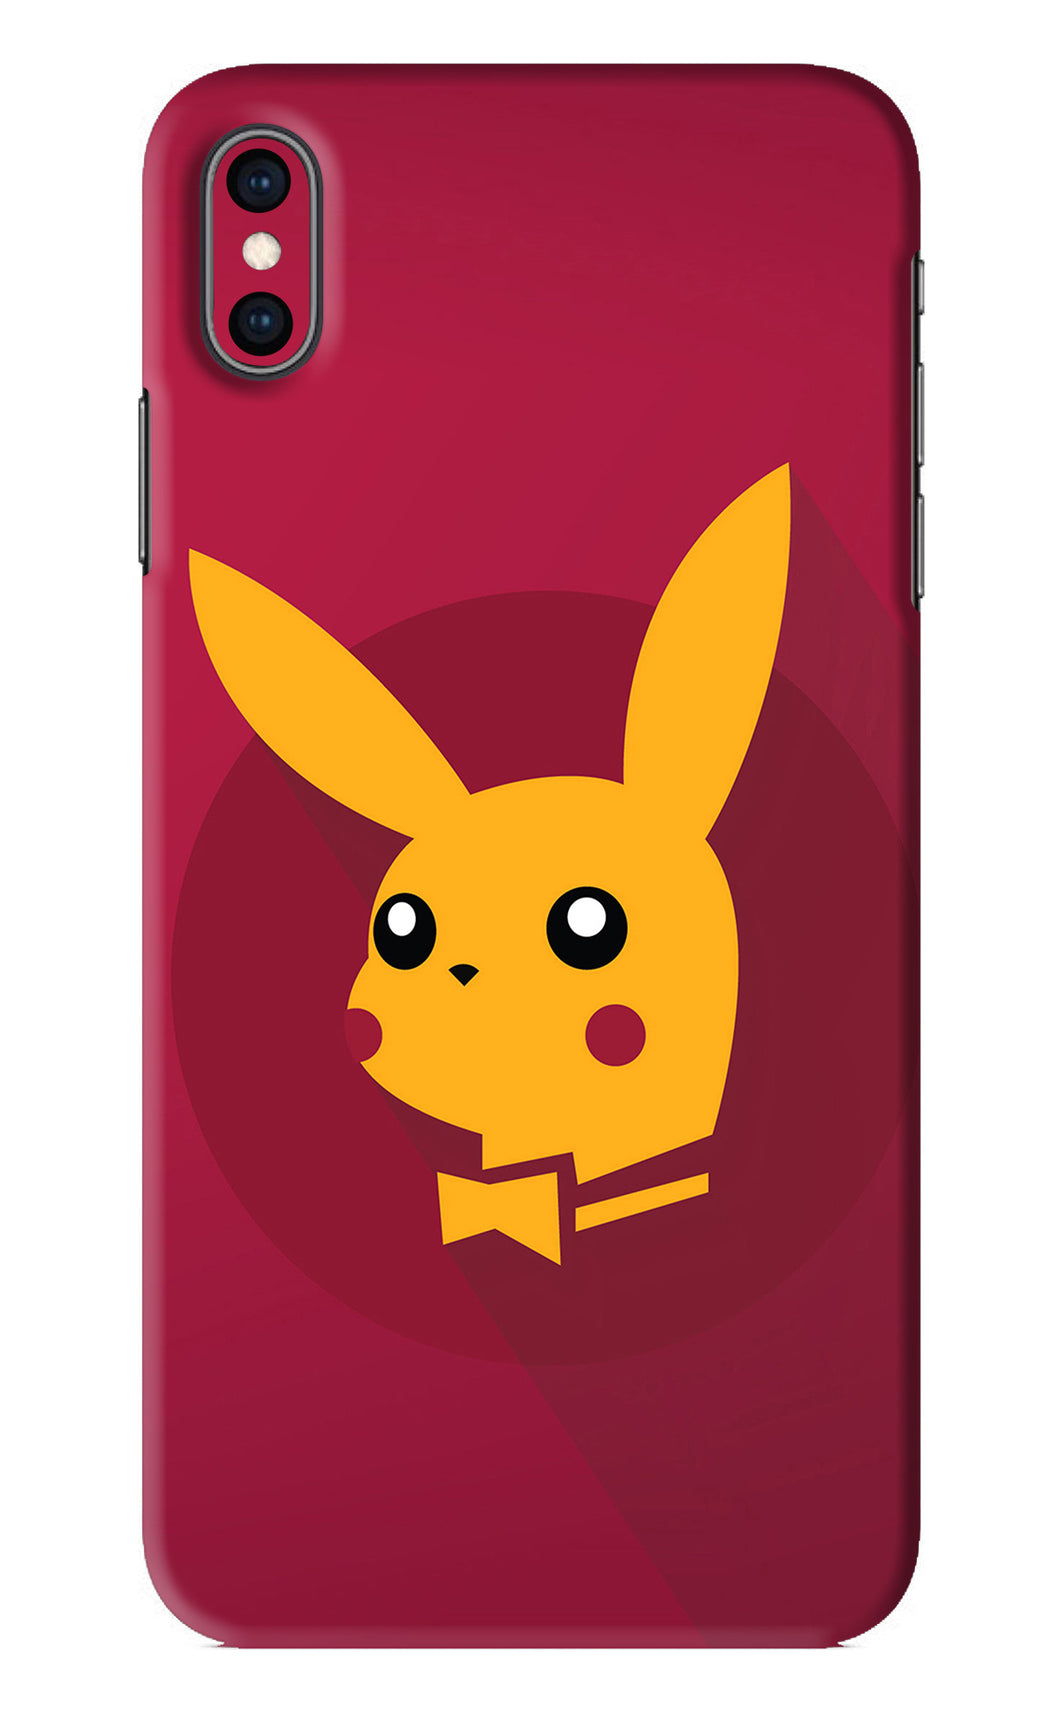 Pikachu iPhone XS Max Back Skin Wrap